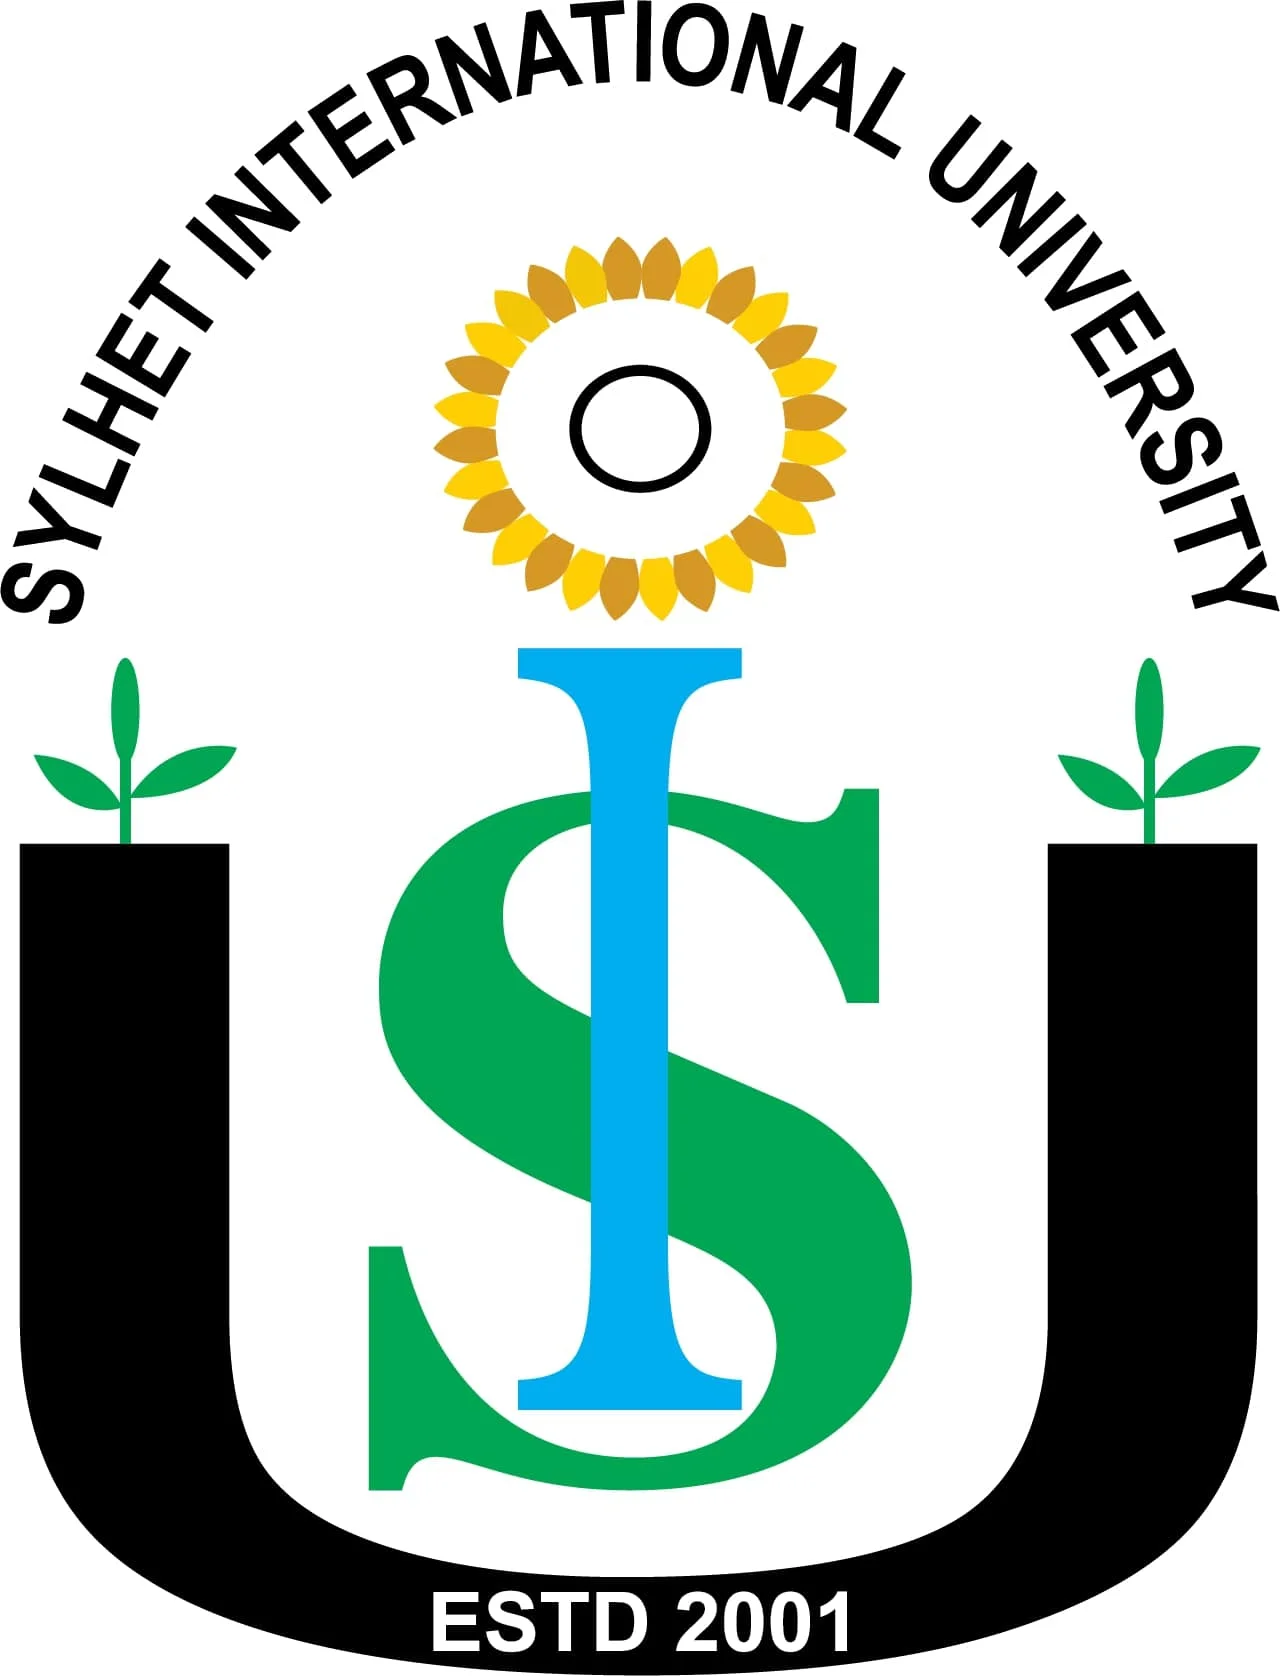 Sylhet International University